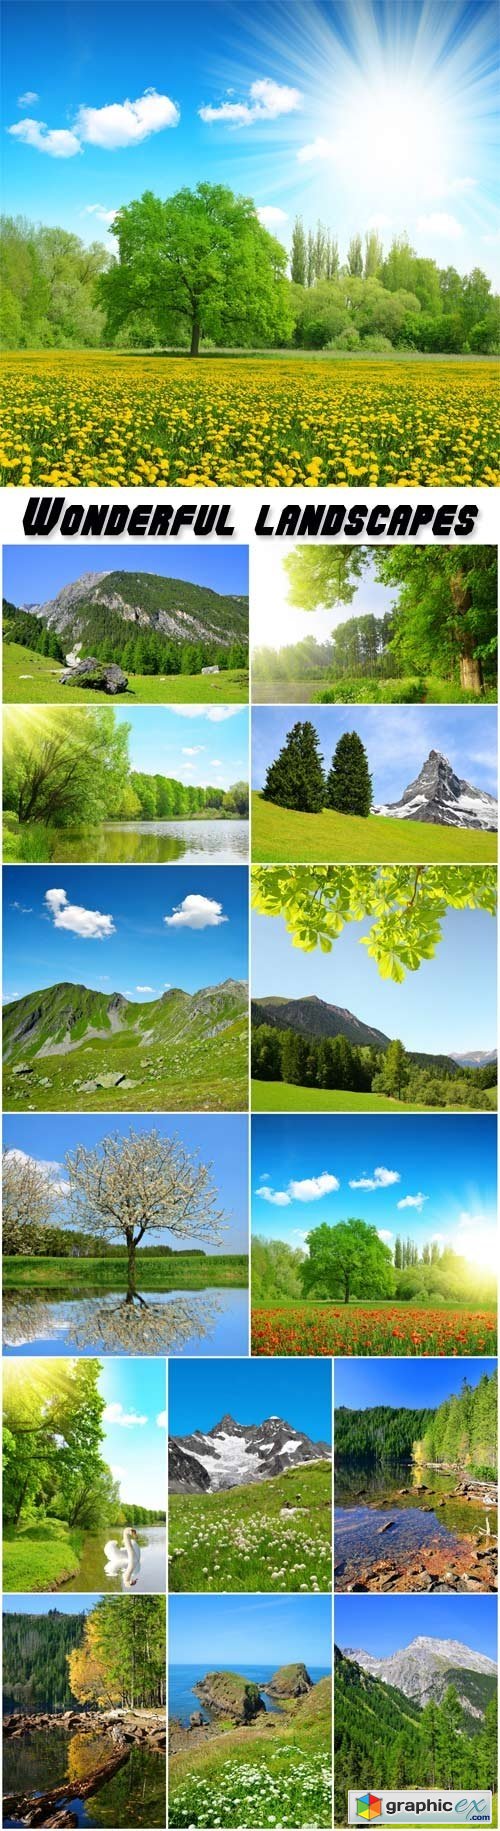 Wonderful landscapes, nature